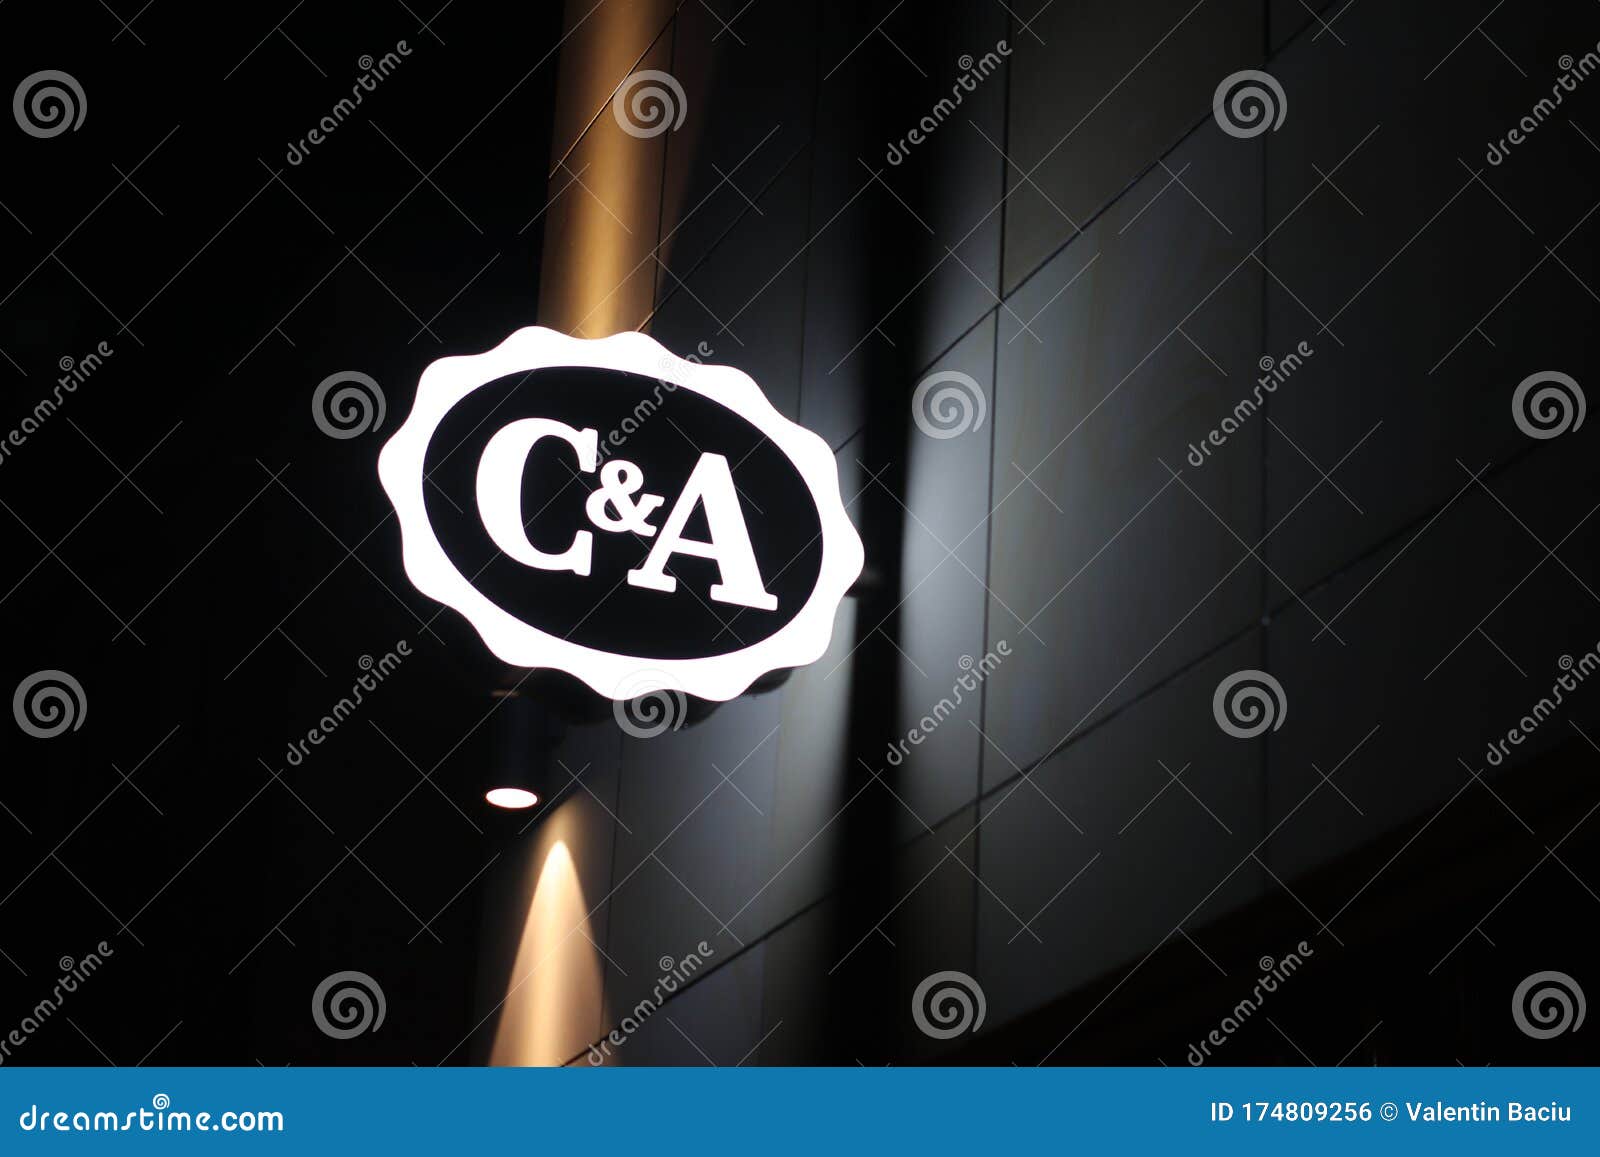 C&a Logo Emblem at Night Editorial Photo - Image of night, light: 174809256